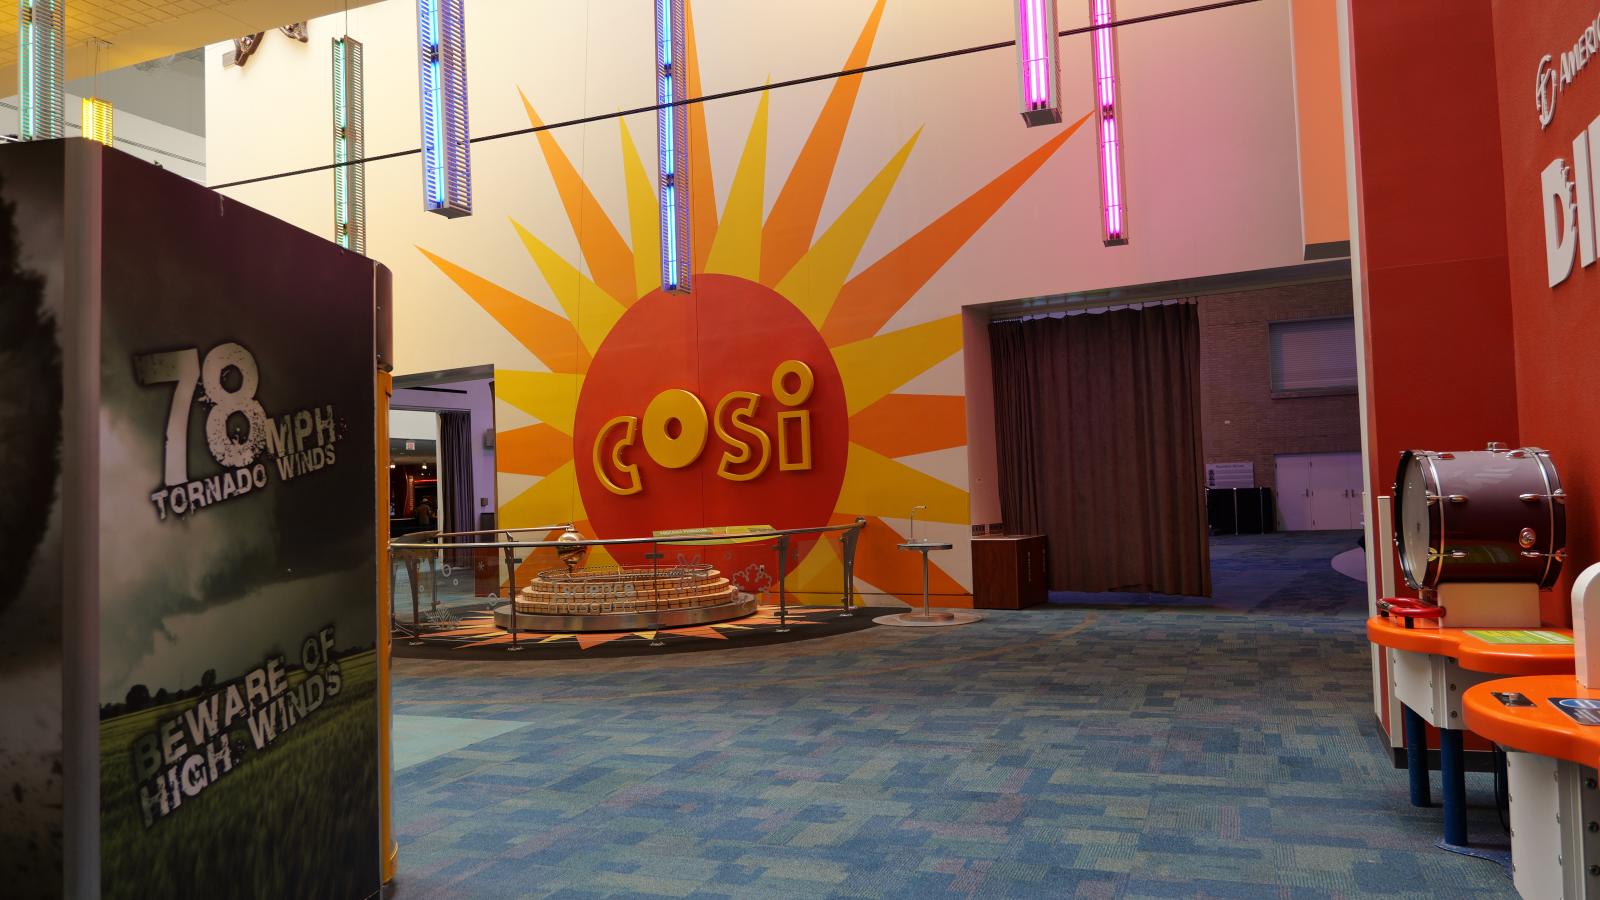 COSI Lobby pendulum display